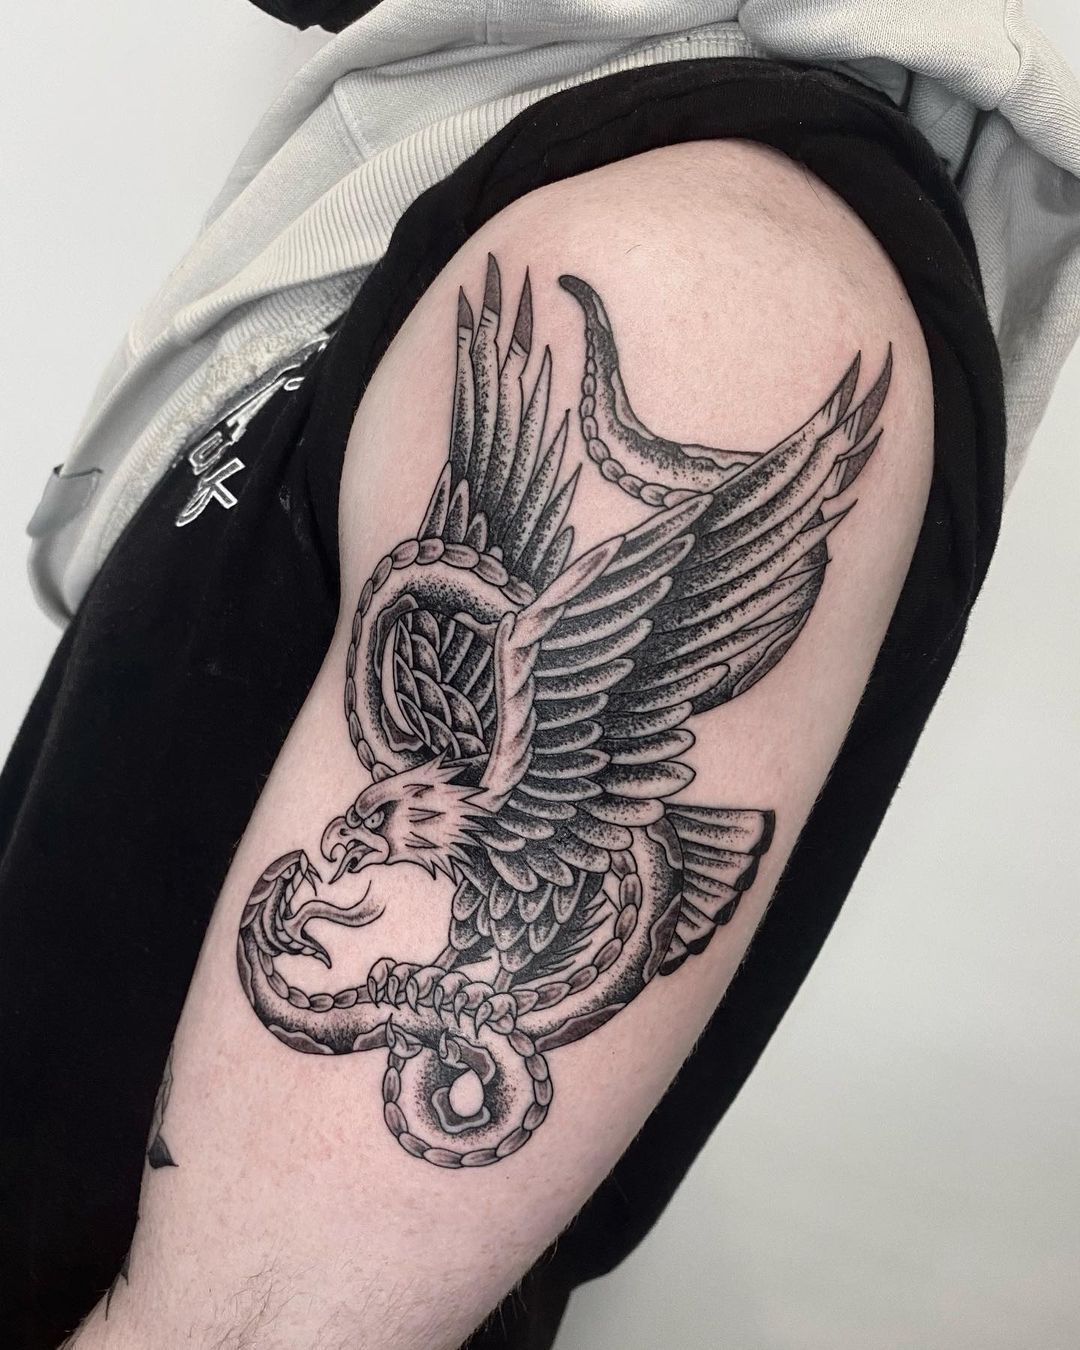 Boston Rogoz Tattoo : Tattoos : Nature Animal Snake : Eagles vs snake sleeve